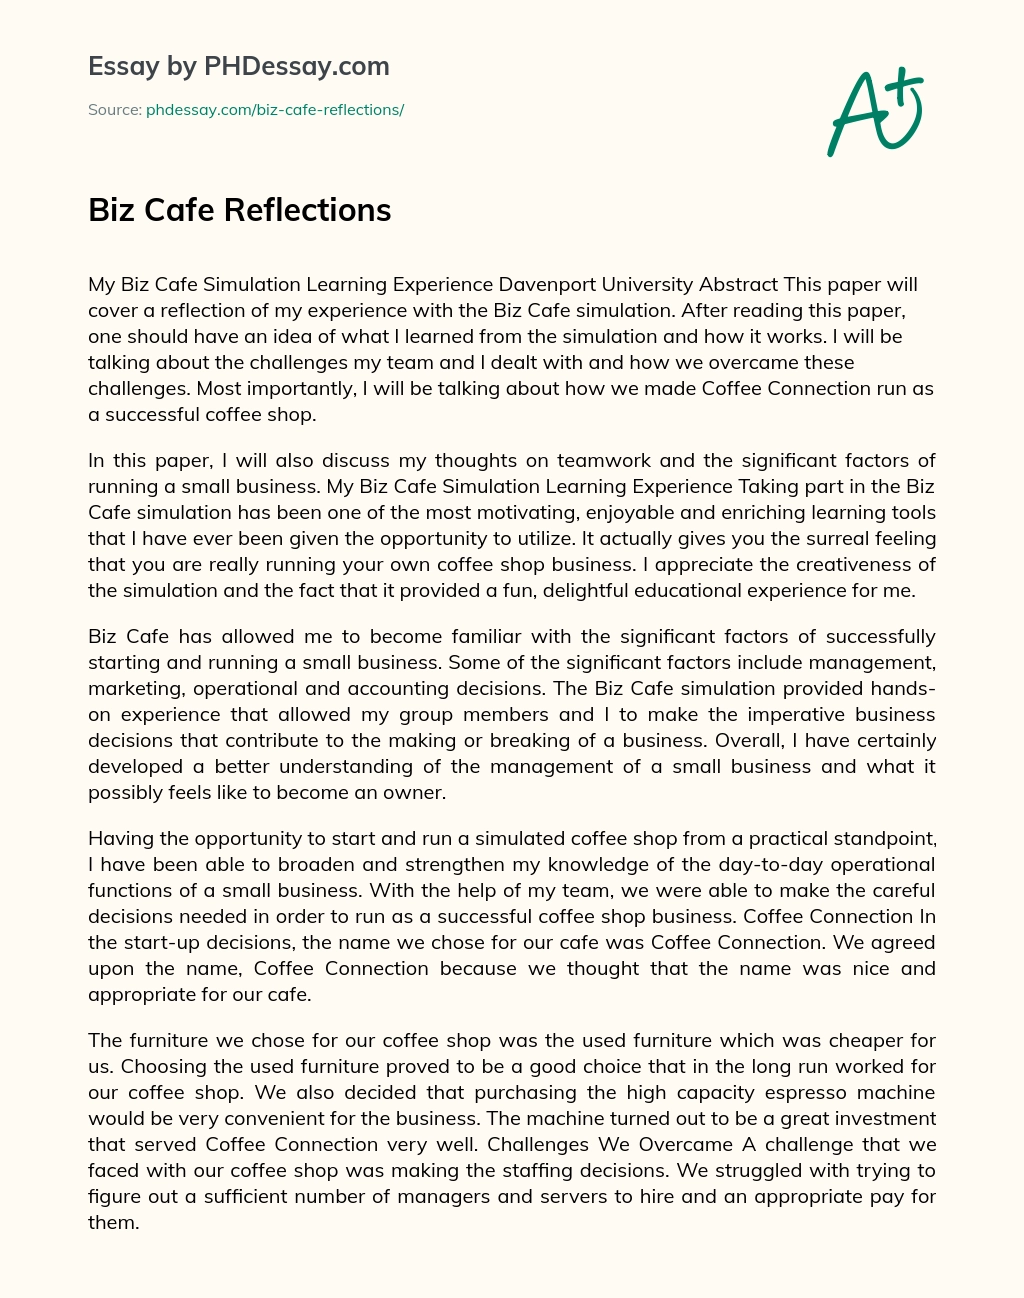 Biz Cafe Reflections essay